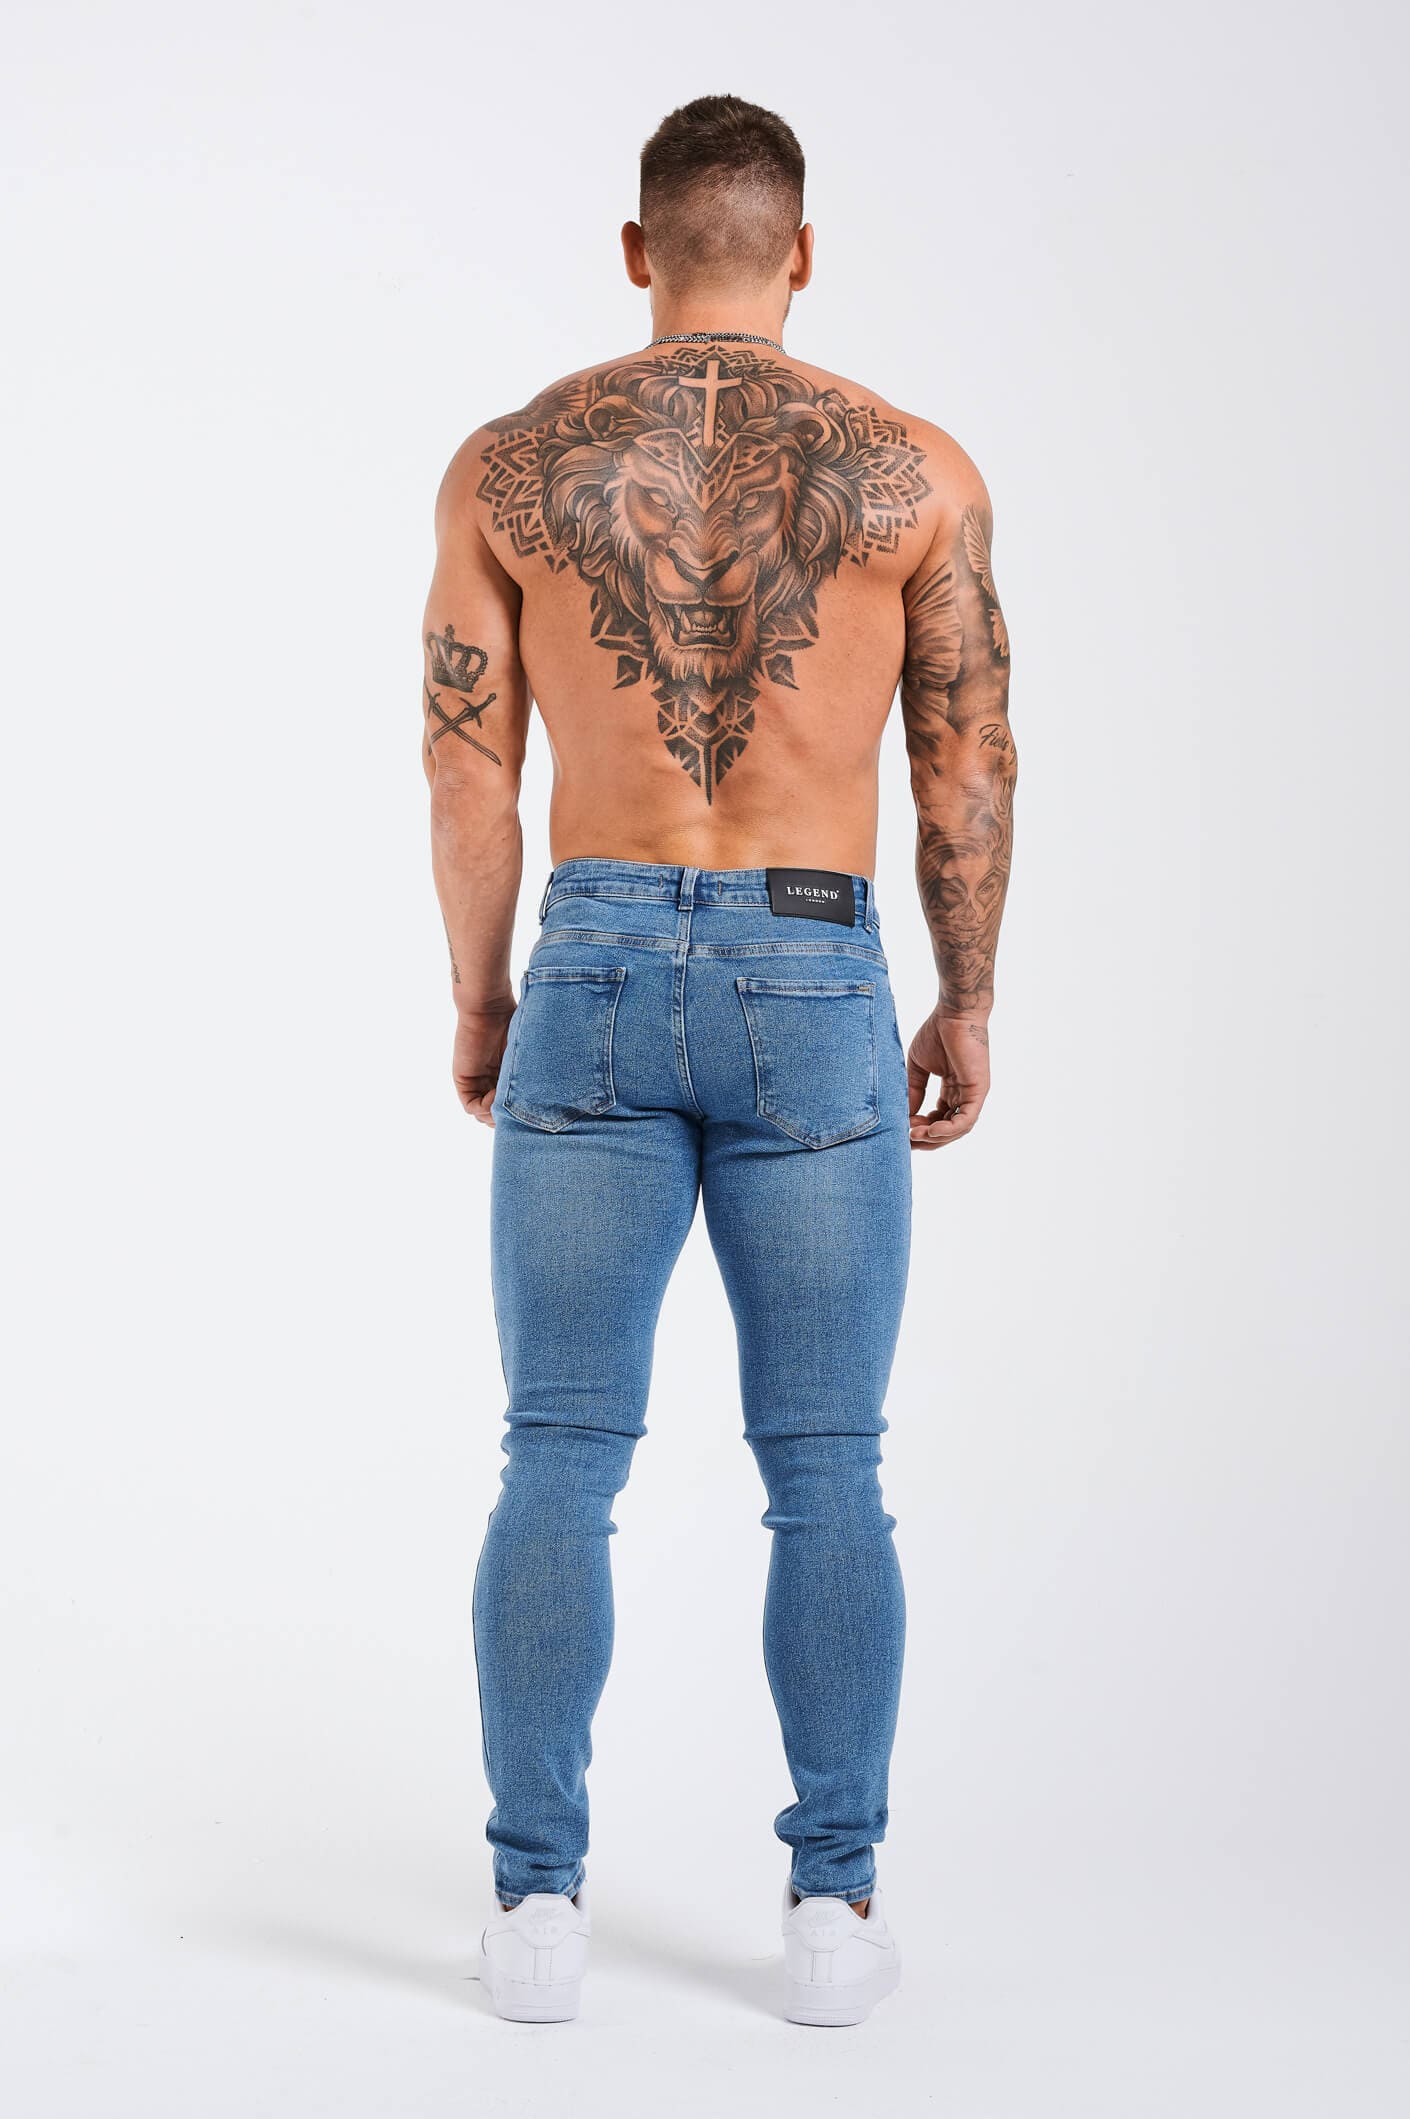 Legend London Jeans - slim 2.0 SLIM FIT JEANS 2.0 - LIGHT BLUE